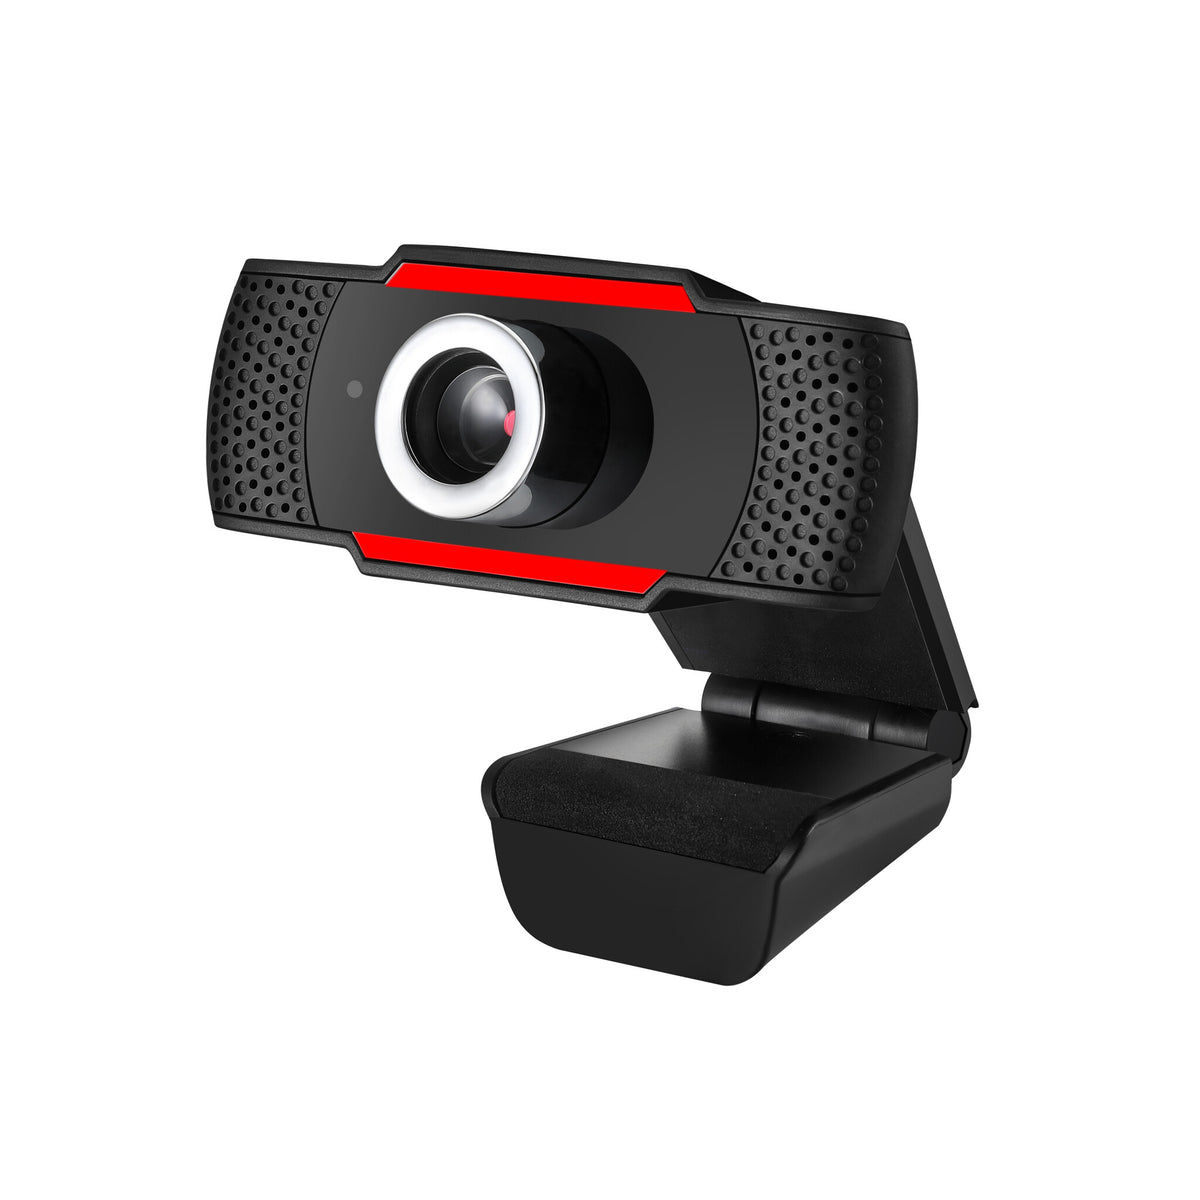 Adesso CyberTrack H3 - 1.3 MP 1280 x 720 pixels USB 2.0 webcam